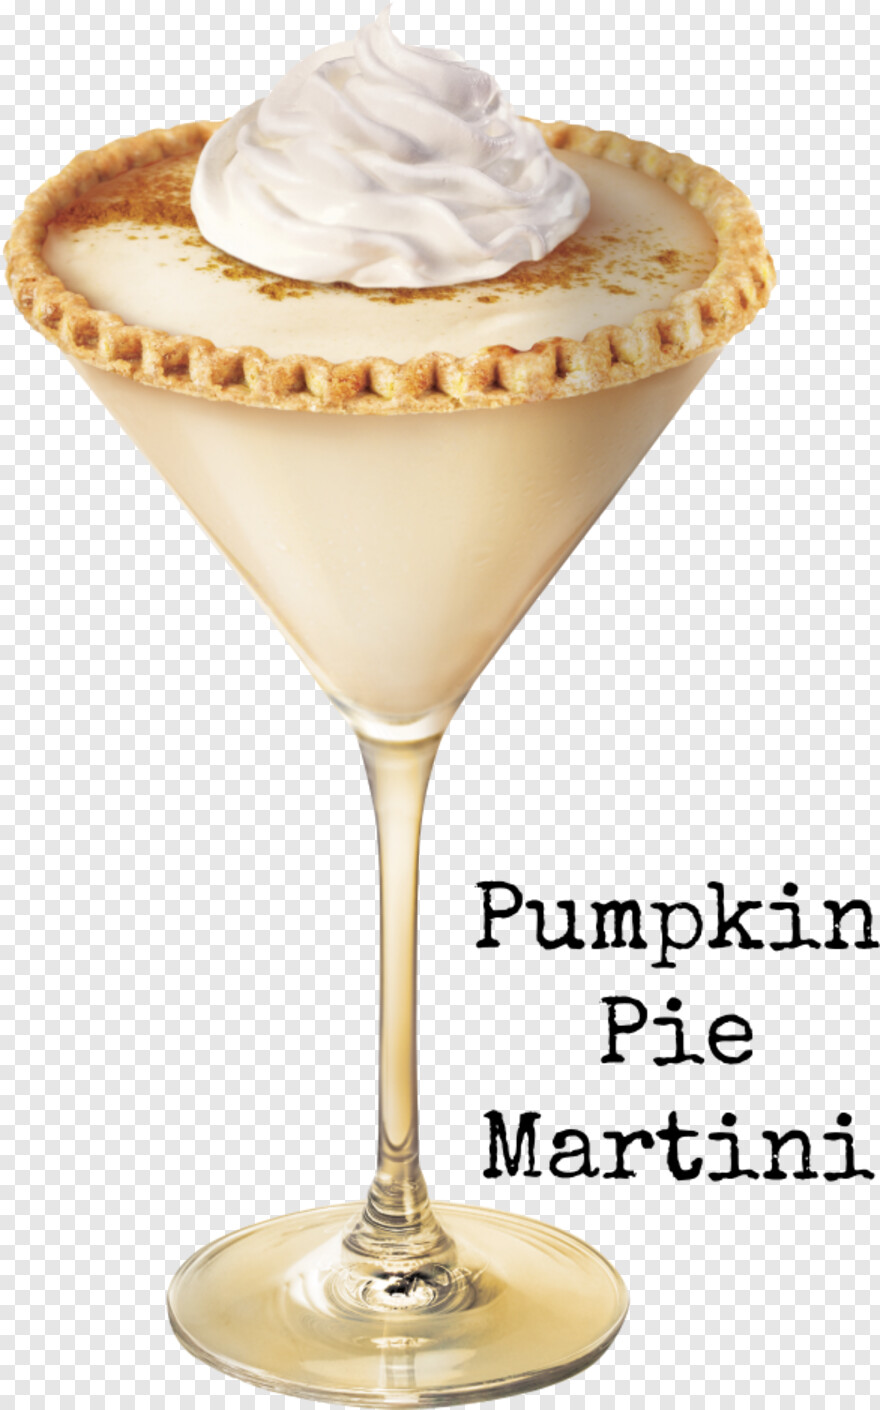  Thanksgiving Pumpkin, Pumpkin Pie, Thanksgiving Border, Thanksgiving Banner, Scary Pumpkin, Martini Glass